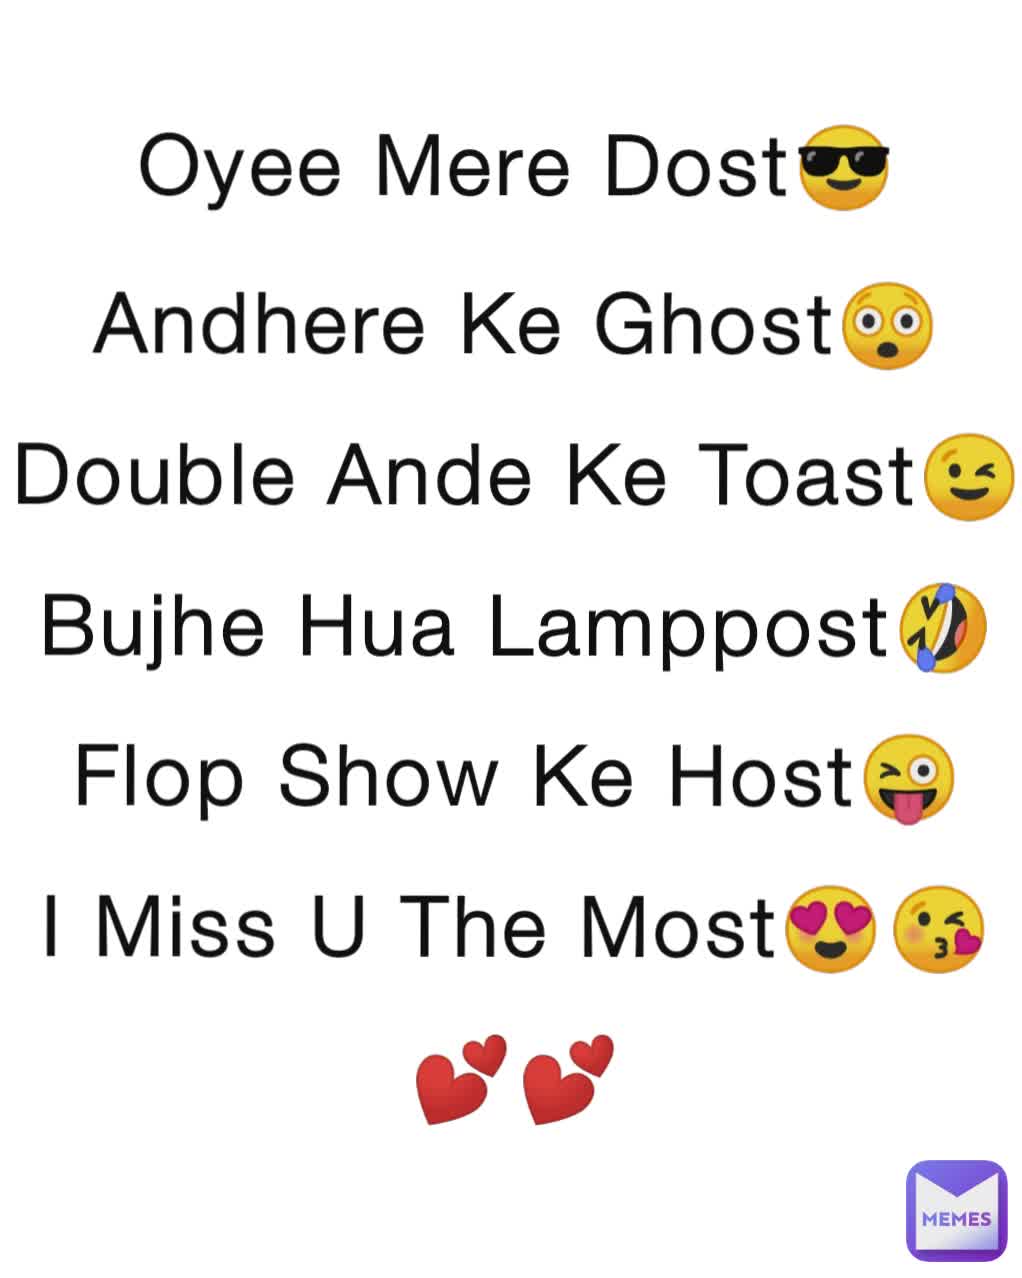 Oyee Mere Dost😎
Andhere Ke Ghost😲
Double Ande Ke Toast😉
Bujhe Hua Lamppost🤣
Flop Show Ke Host😜
I Miss U The Most😍😘
💕💕